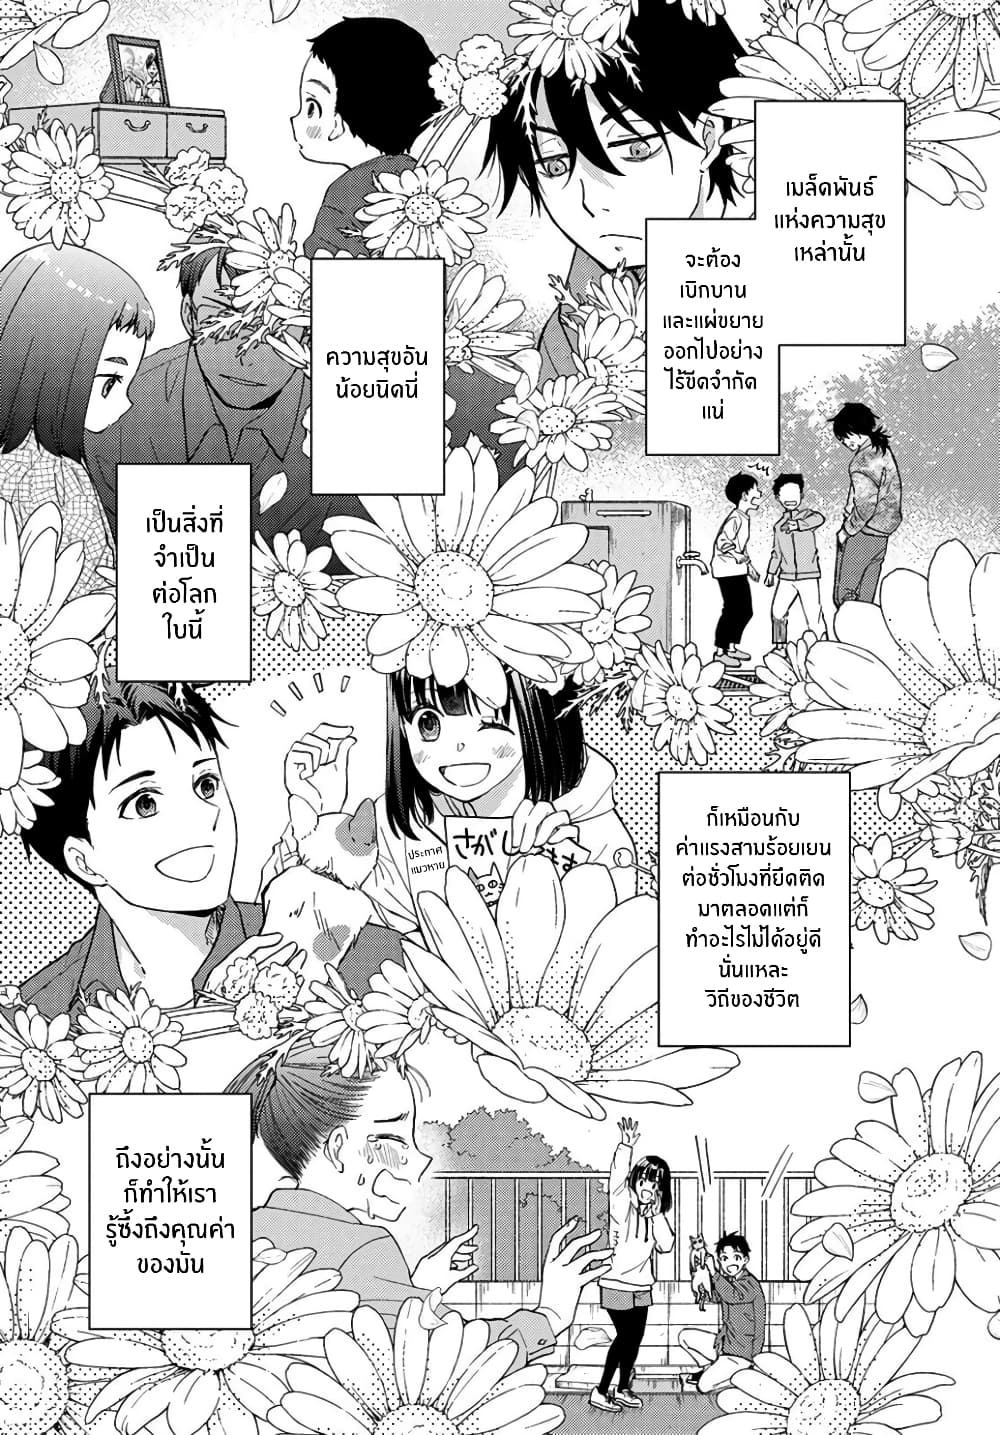 Jikyuu Sanbyaku En no Shinigami 11-ดอกไม้แห่งความสุข 3